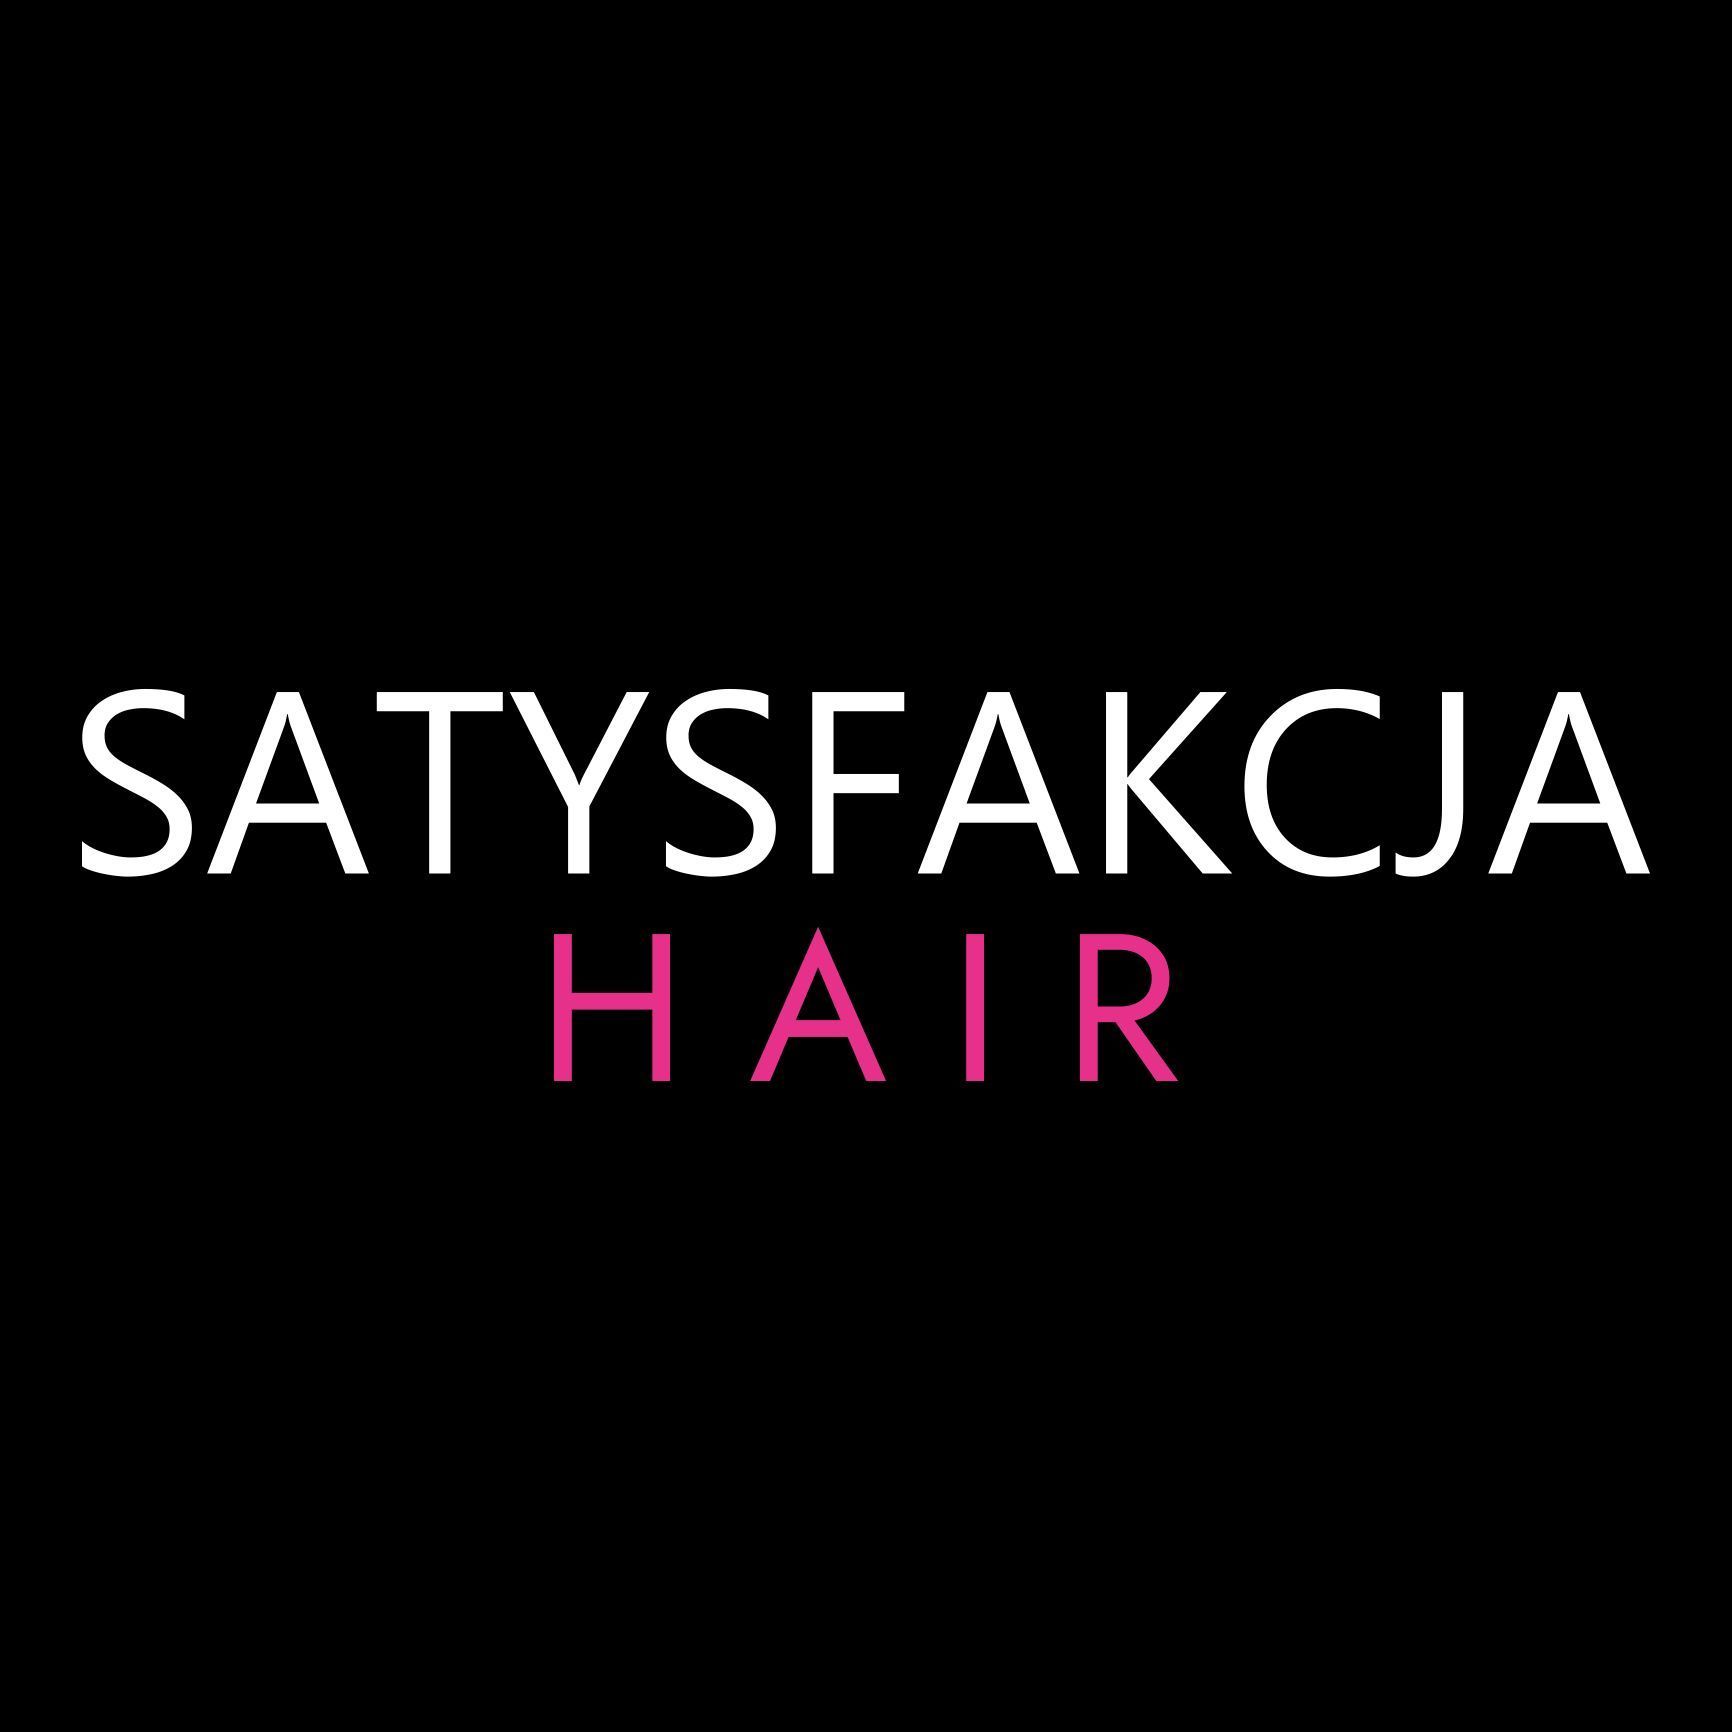 SATYSFAKCJA HAIR, Bielska 42, 43-400, Cieszyn